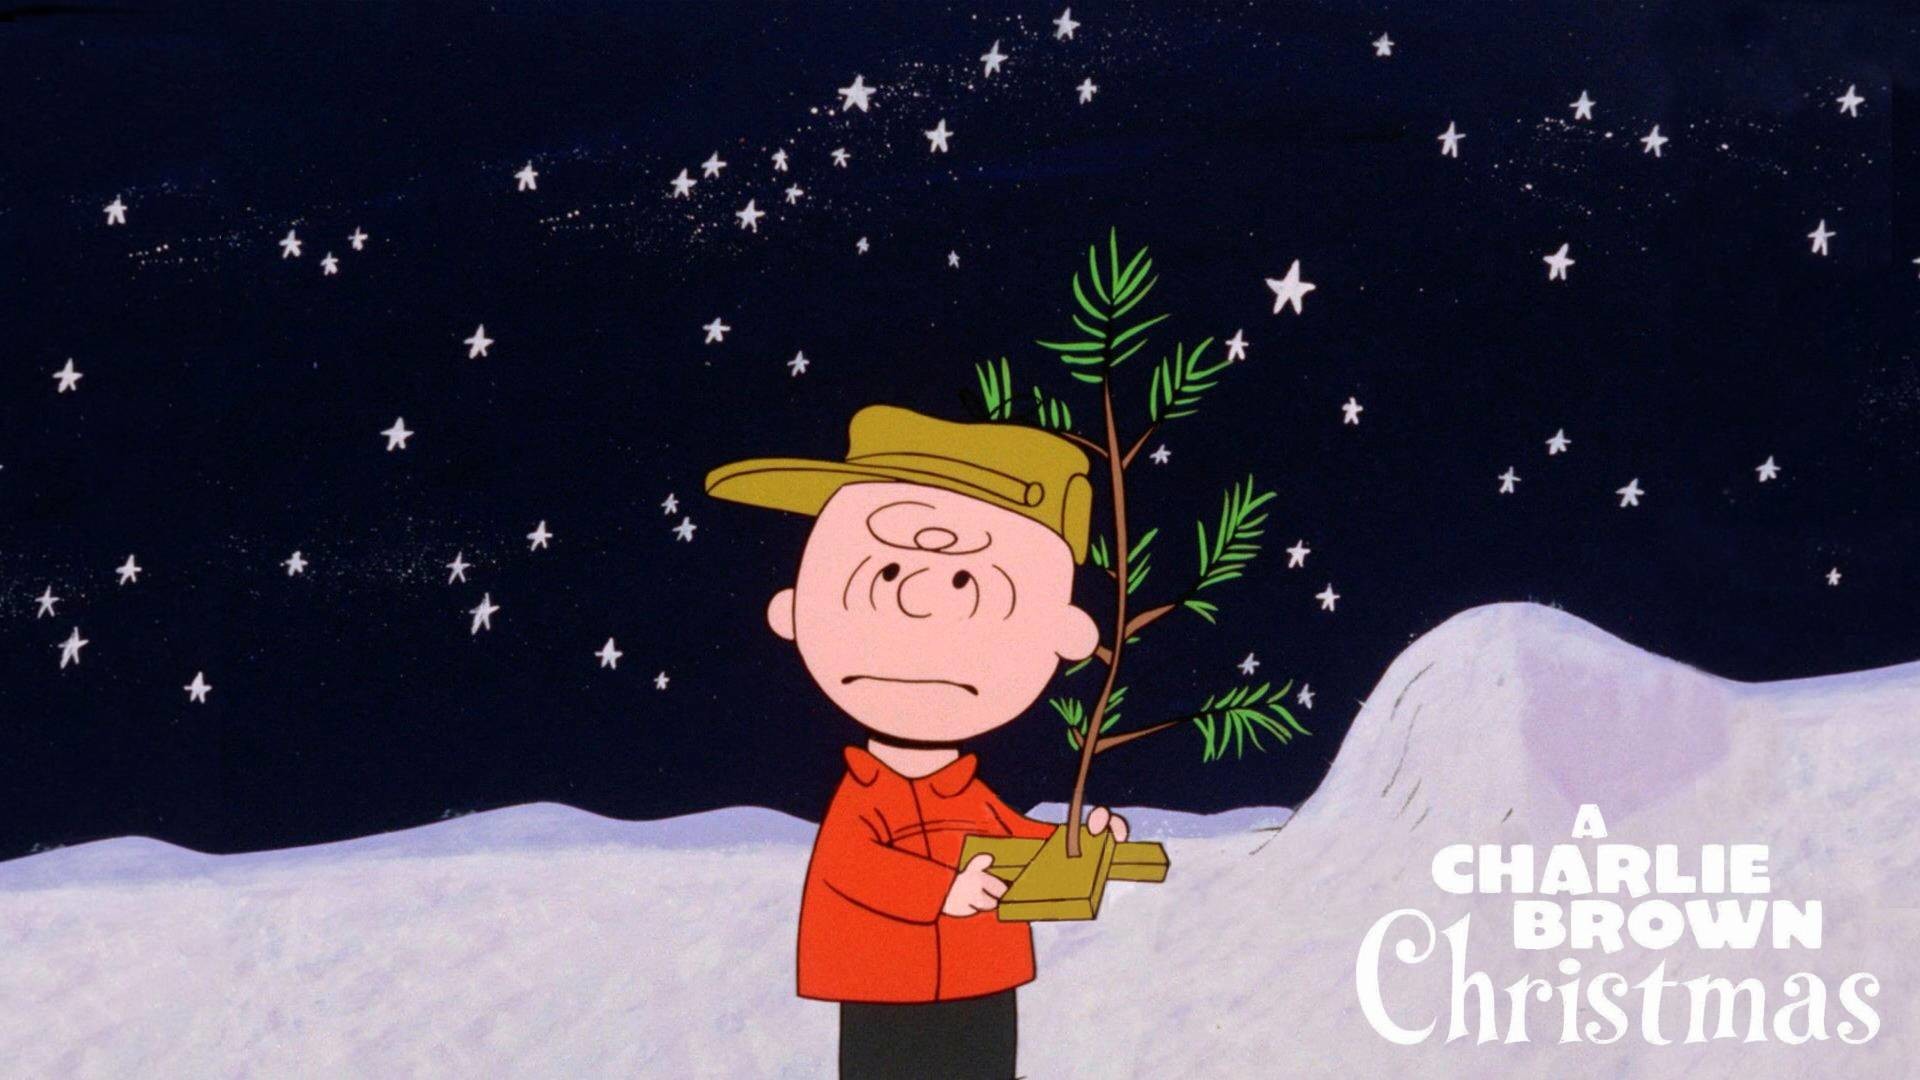 Xmas Stuff For Charlie Brown Christmas Tree Wallpaper